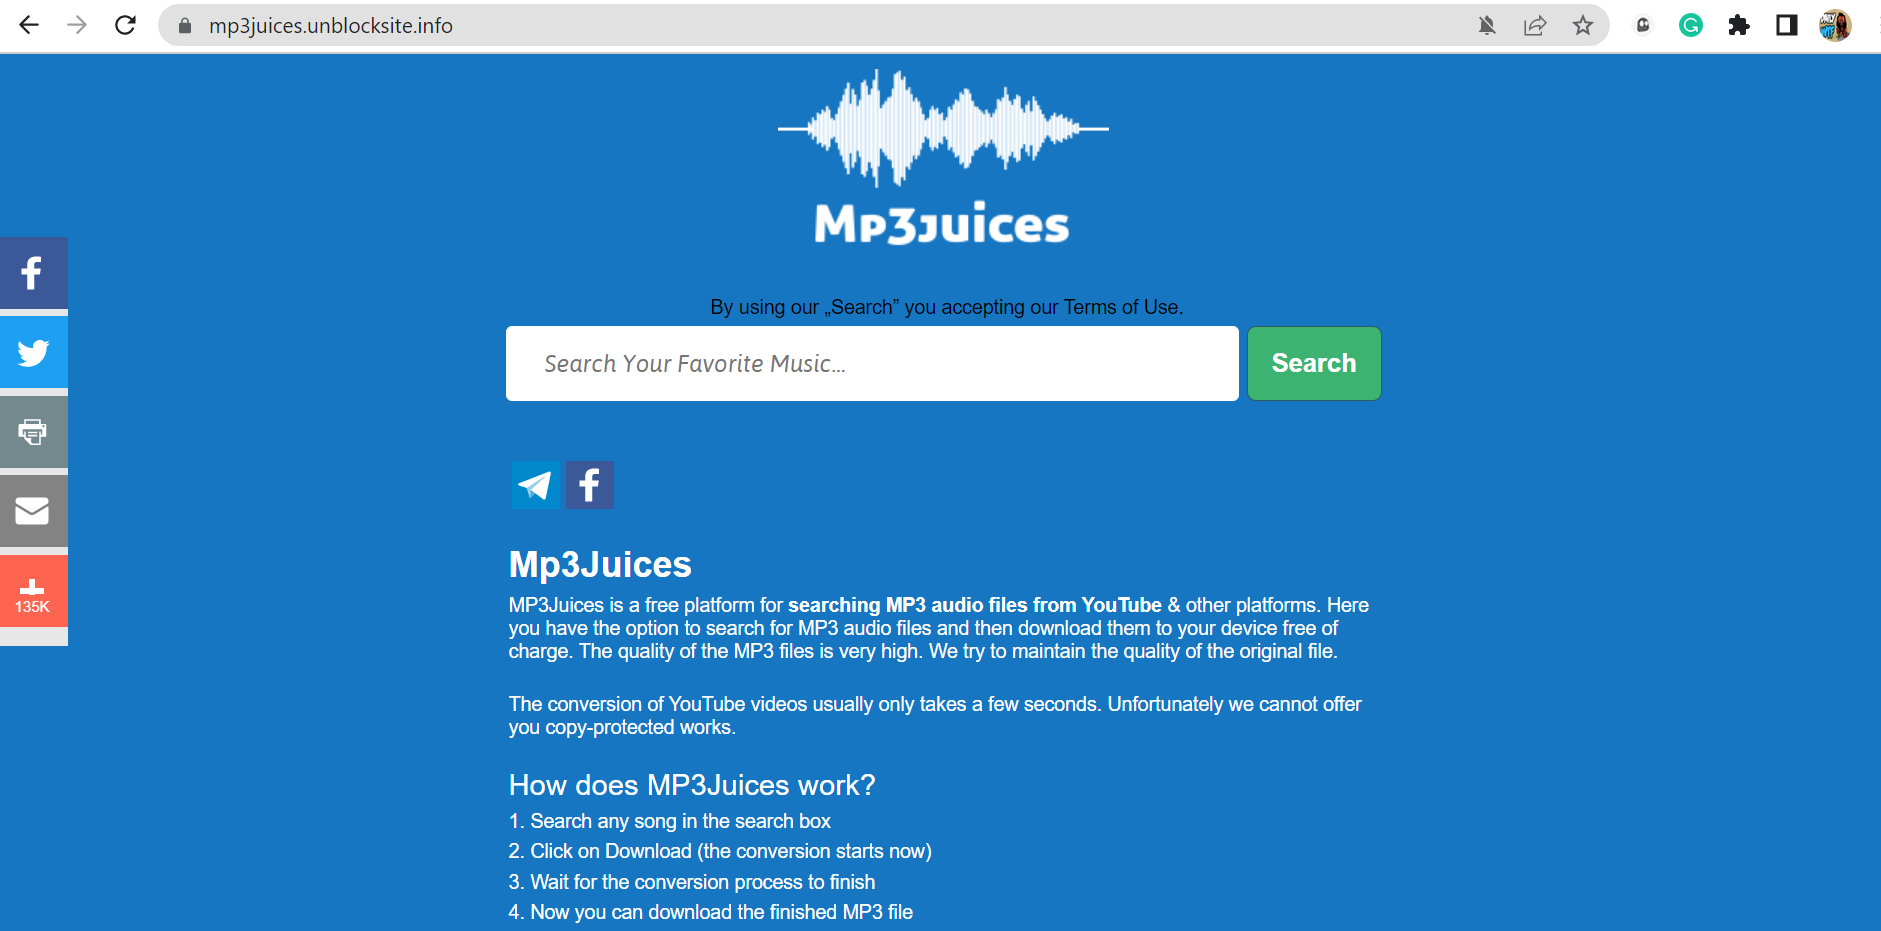 MP3Juices Image